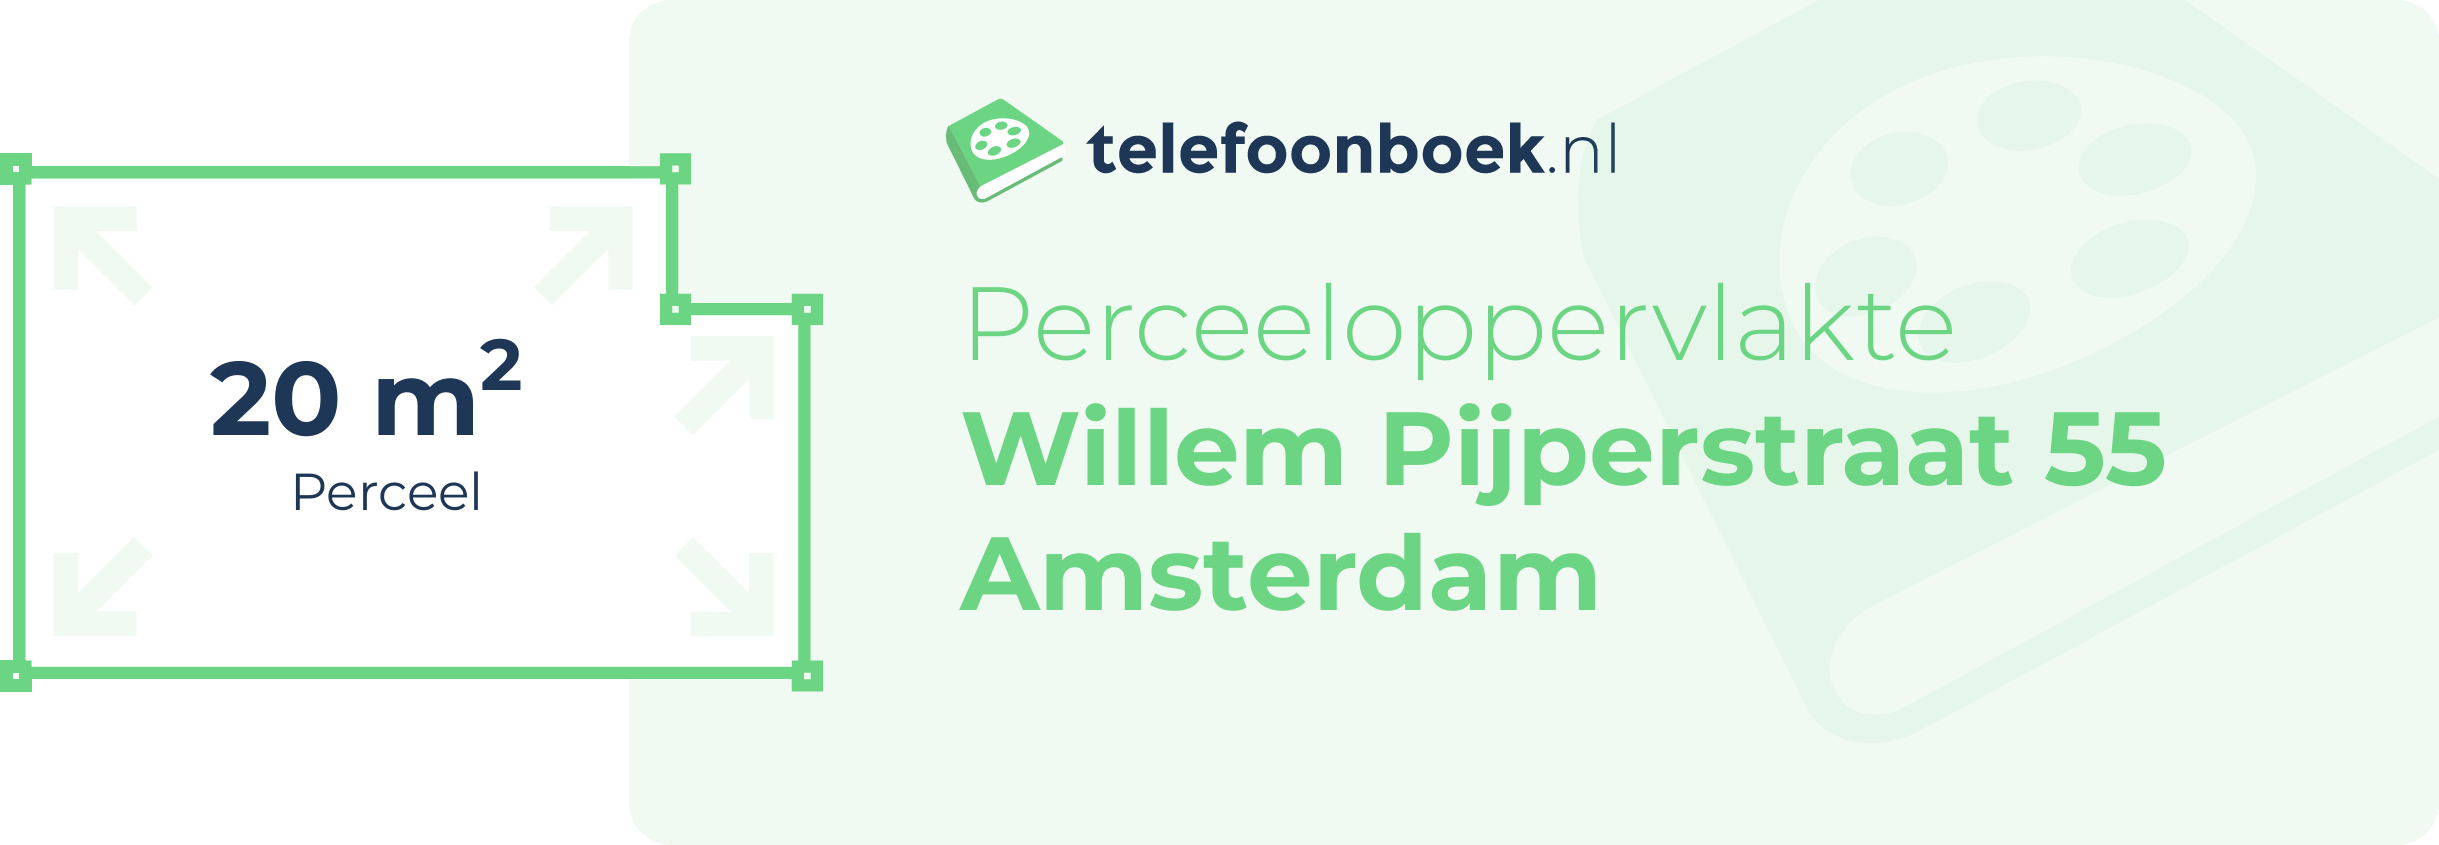 Perceeloppervlakte Willem Pijperstraat 55 Amsterdam